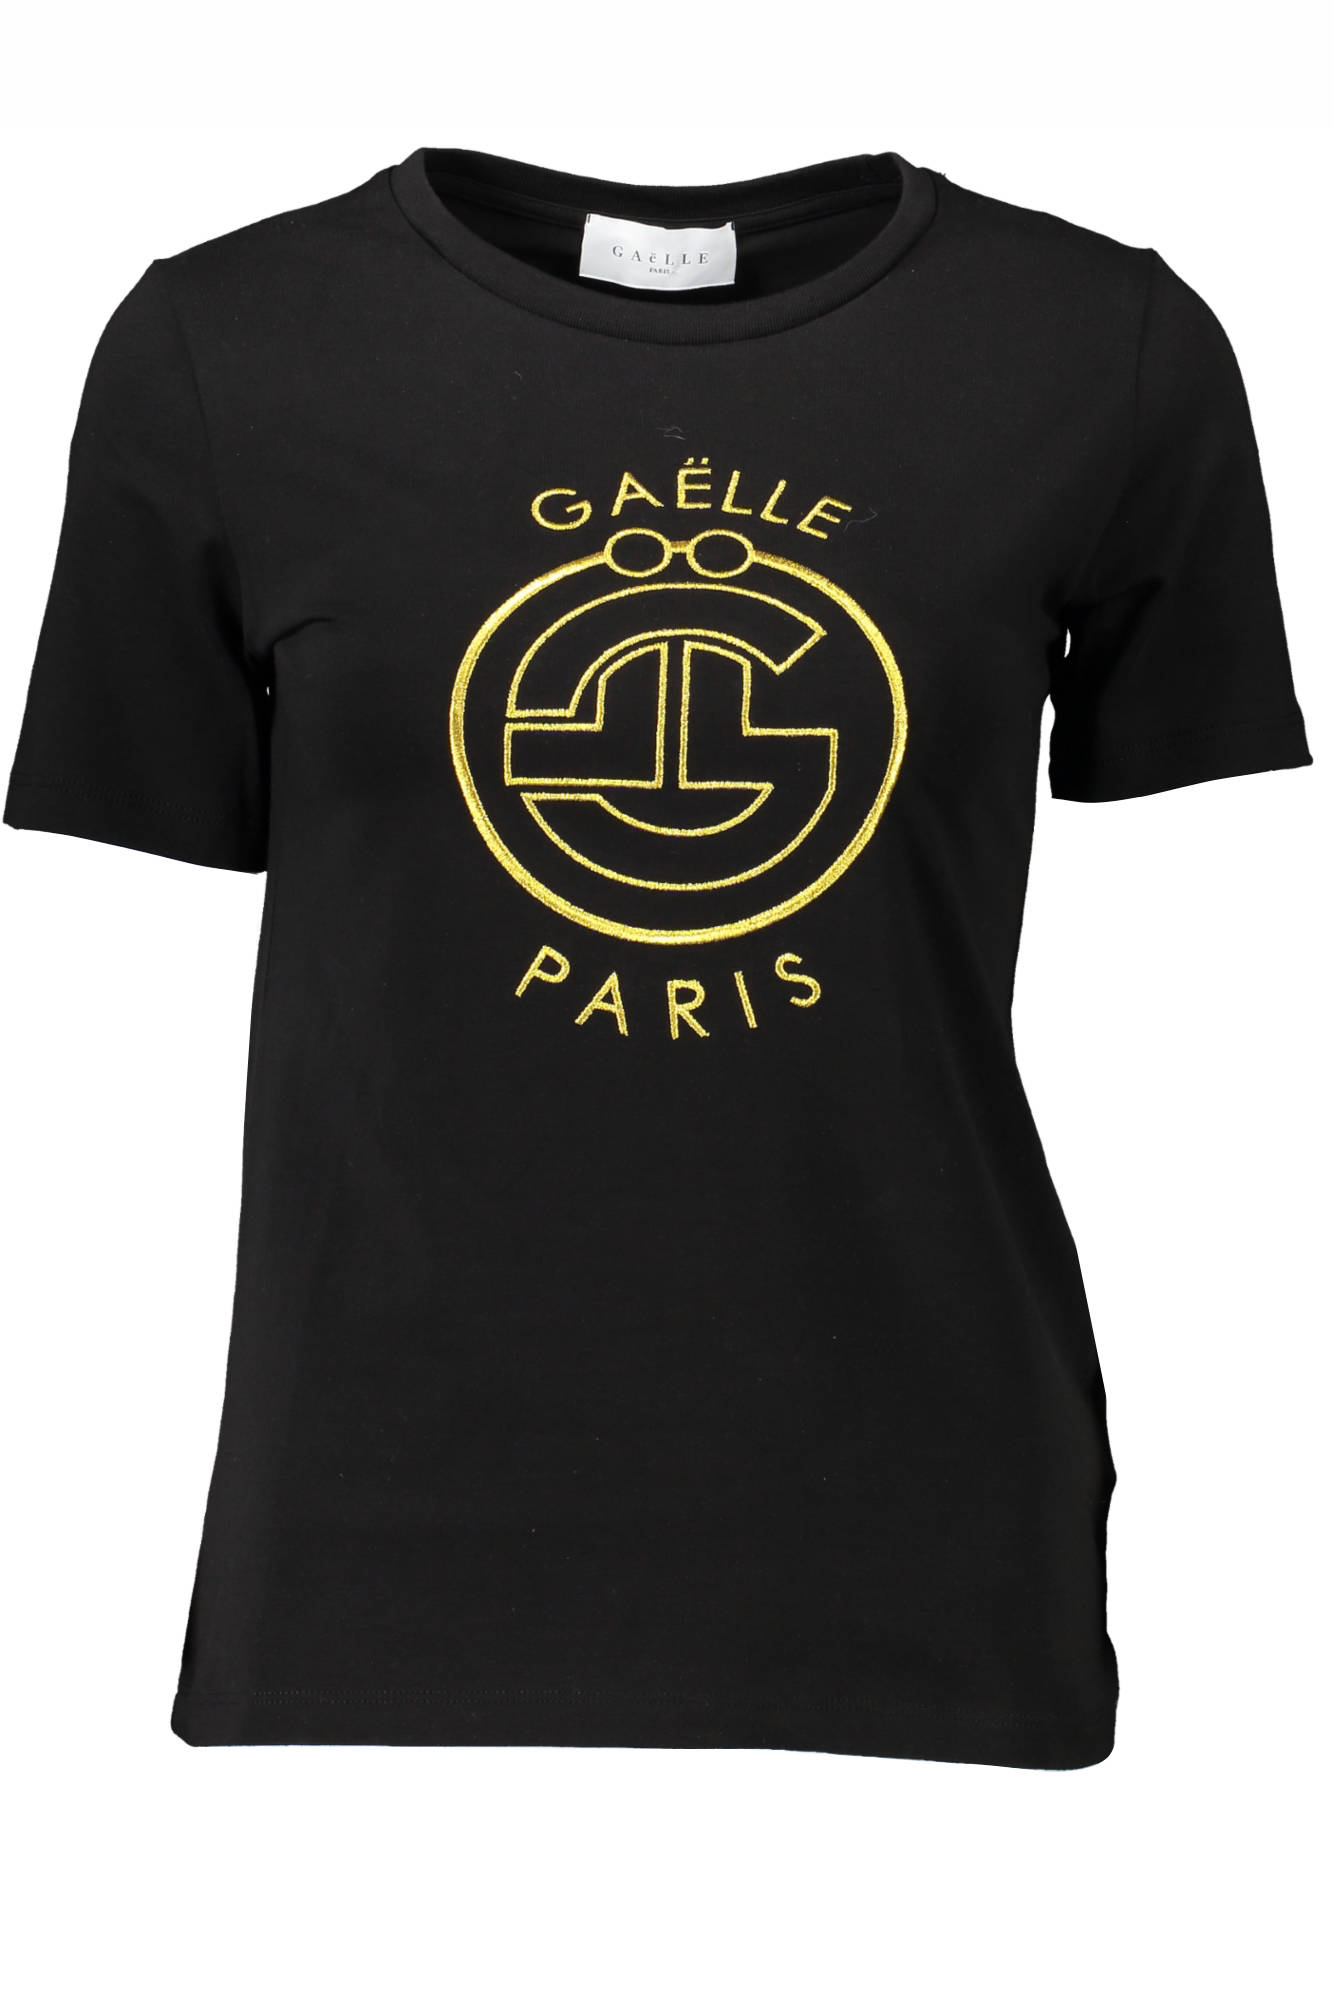 GAELLE PARIS tričko s krátkým rukávem NERO